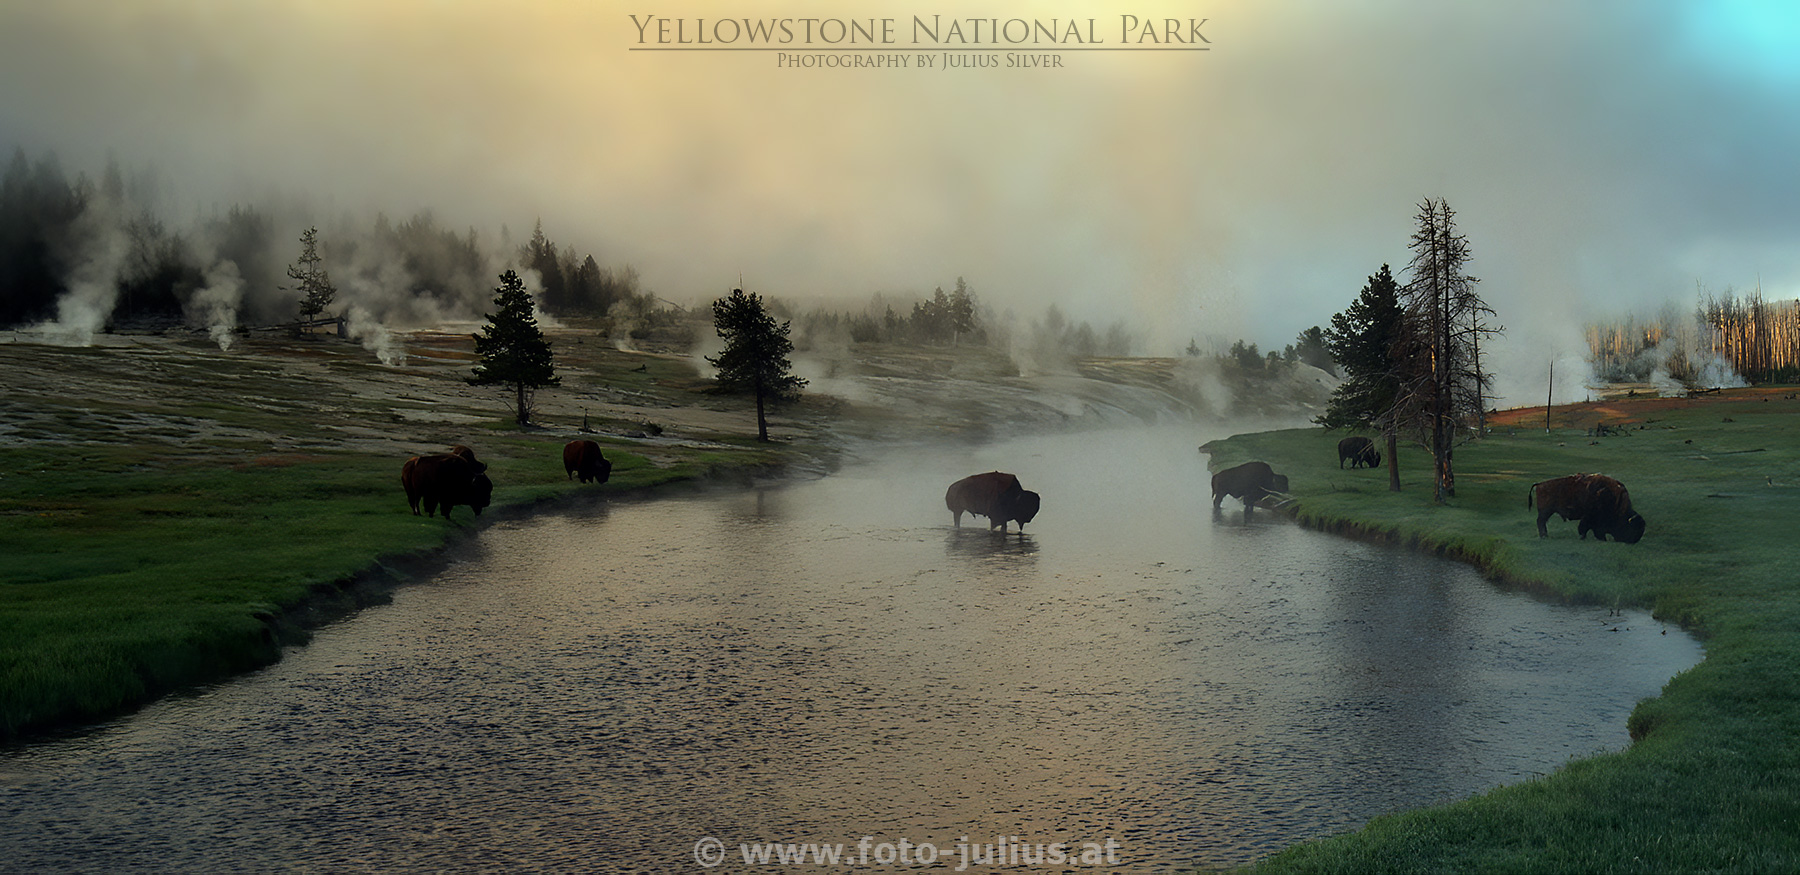 y102a_Bisons_Yellowstone.jpg, 253kB